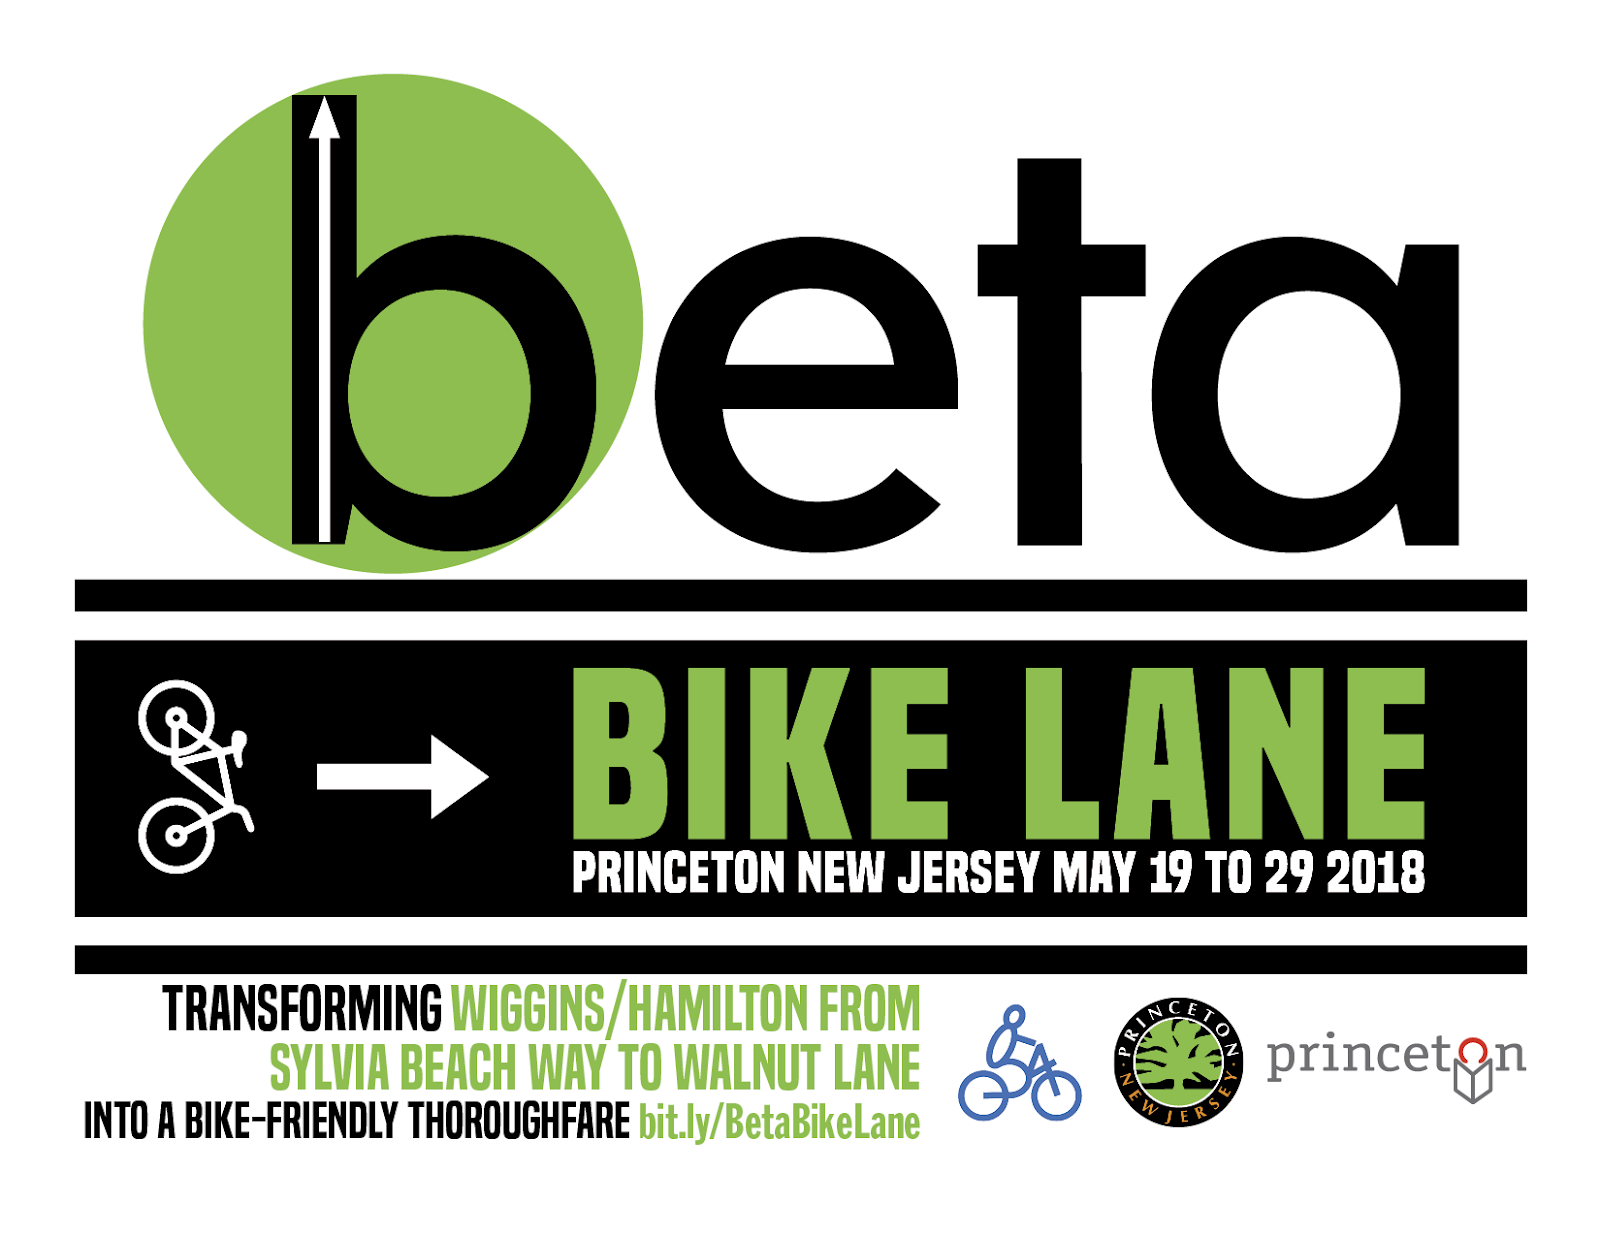 Princeton Pedestrian and Bicycle Advisory Committee: Beta Bike Lane Princeton